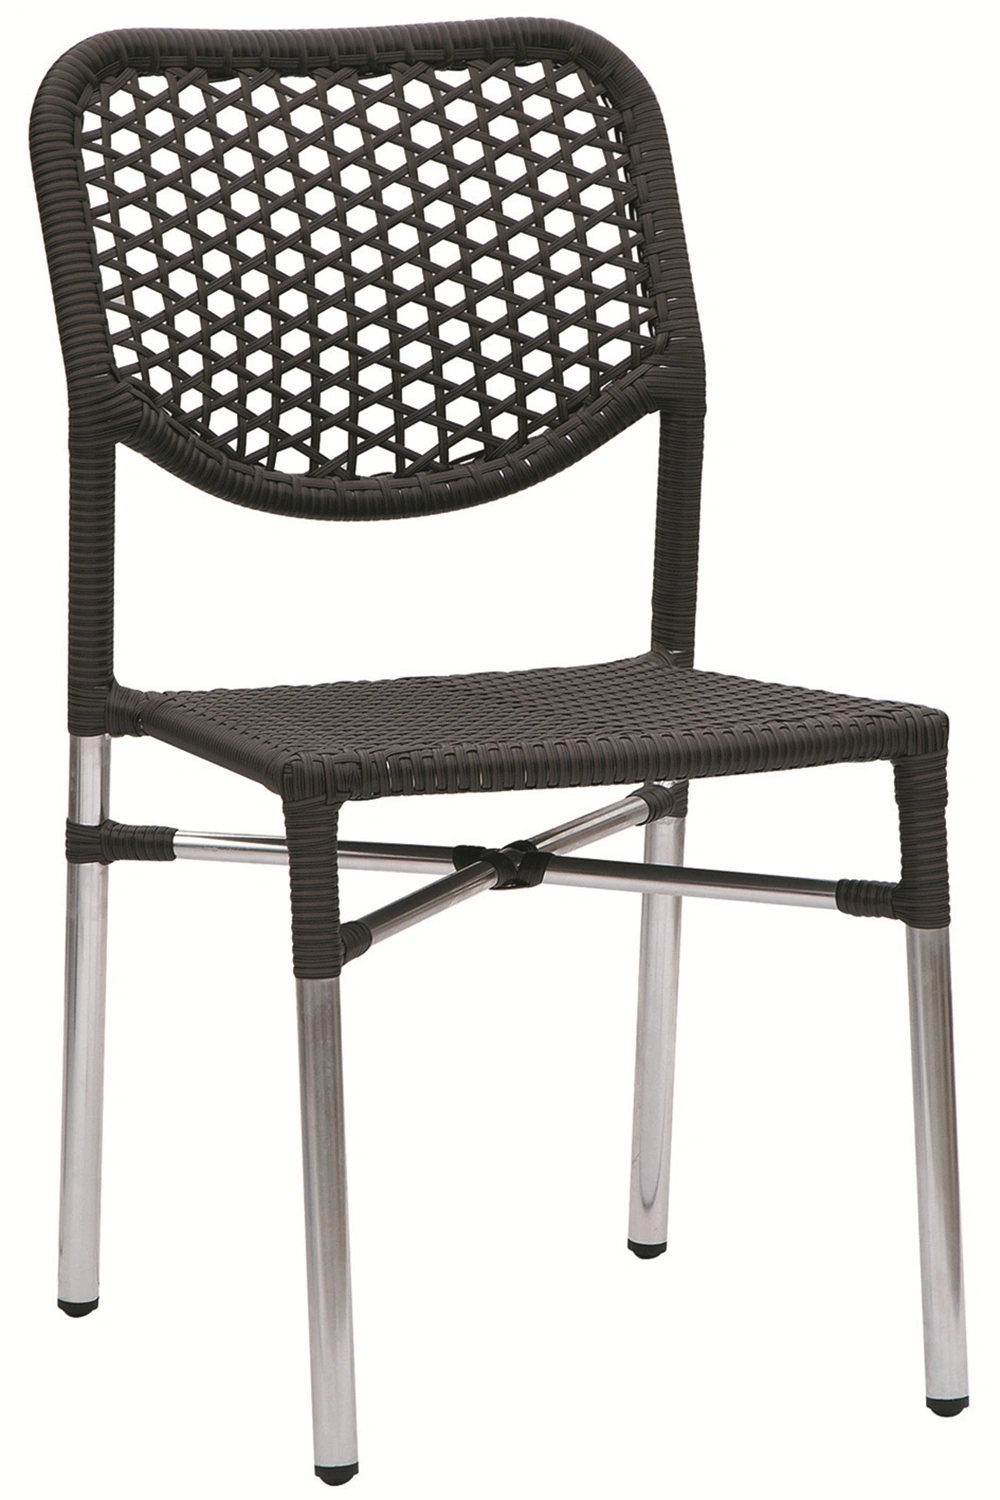 Black Rattan Modern Shiny Aluminum Frame Garden Outdoor Restaurant Dining Room Furniture Chair